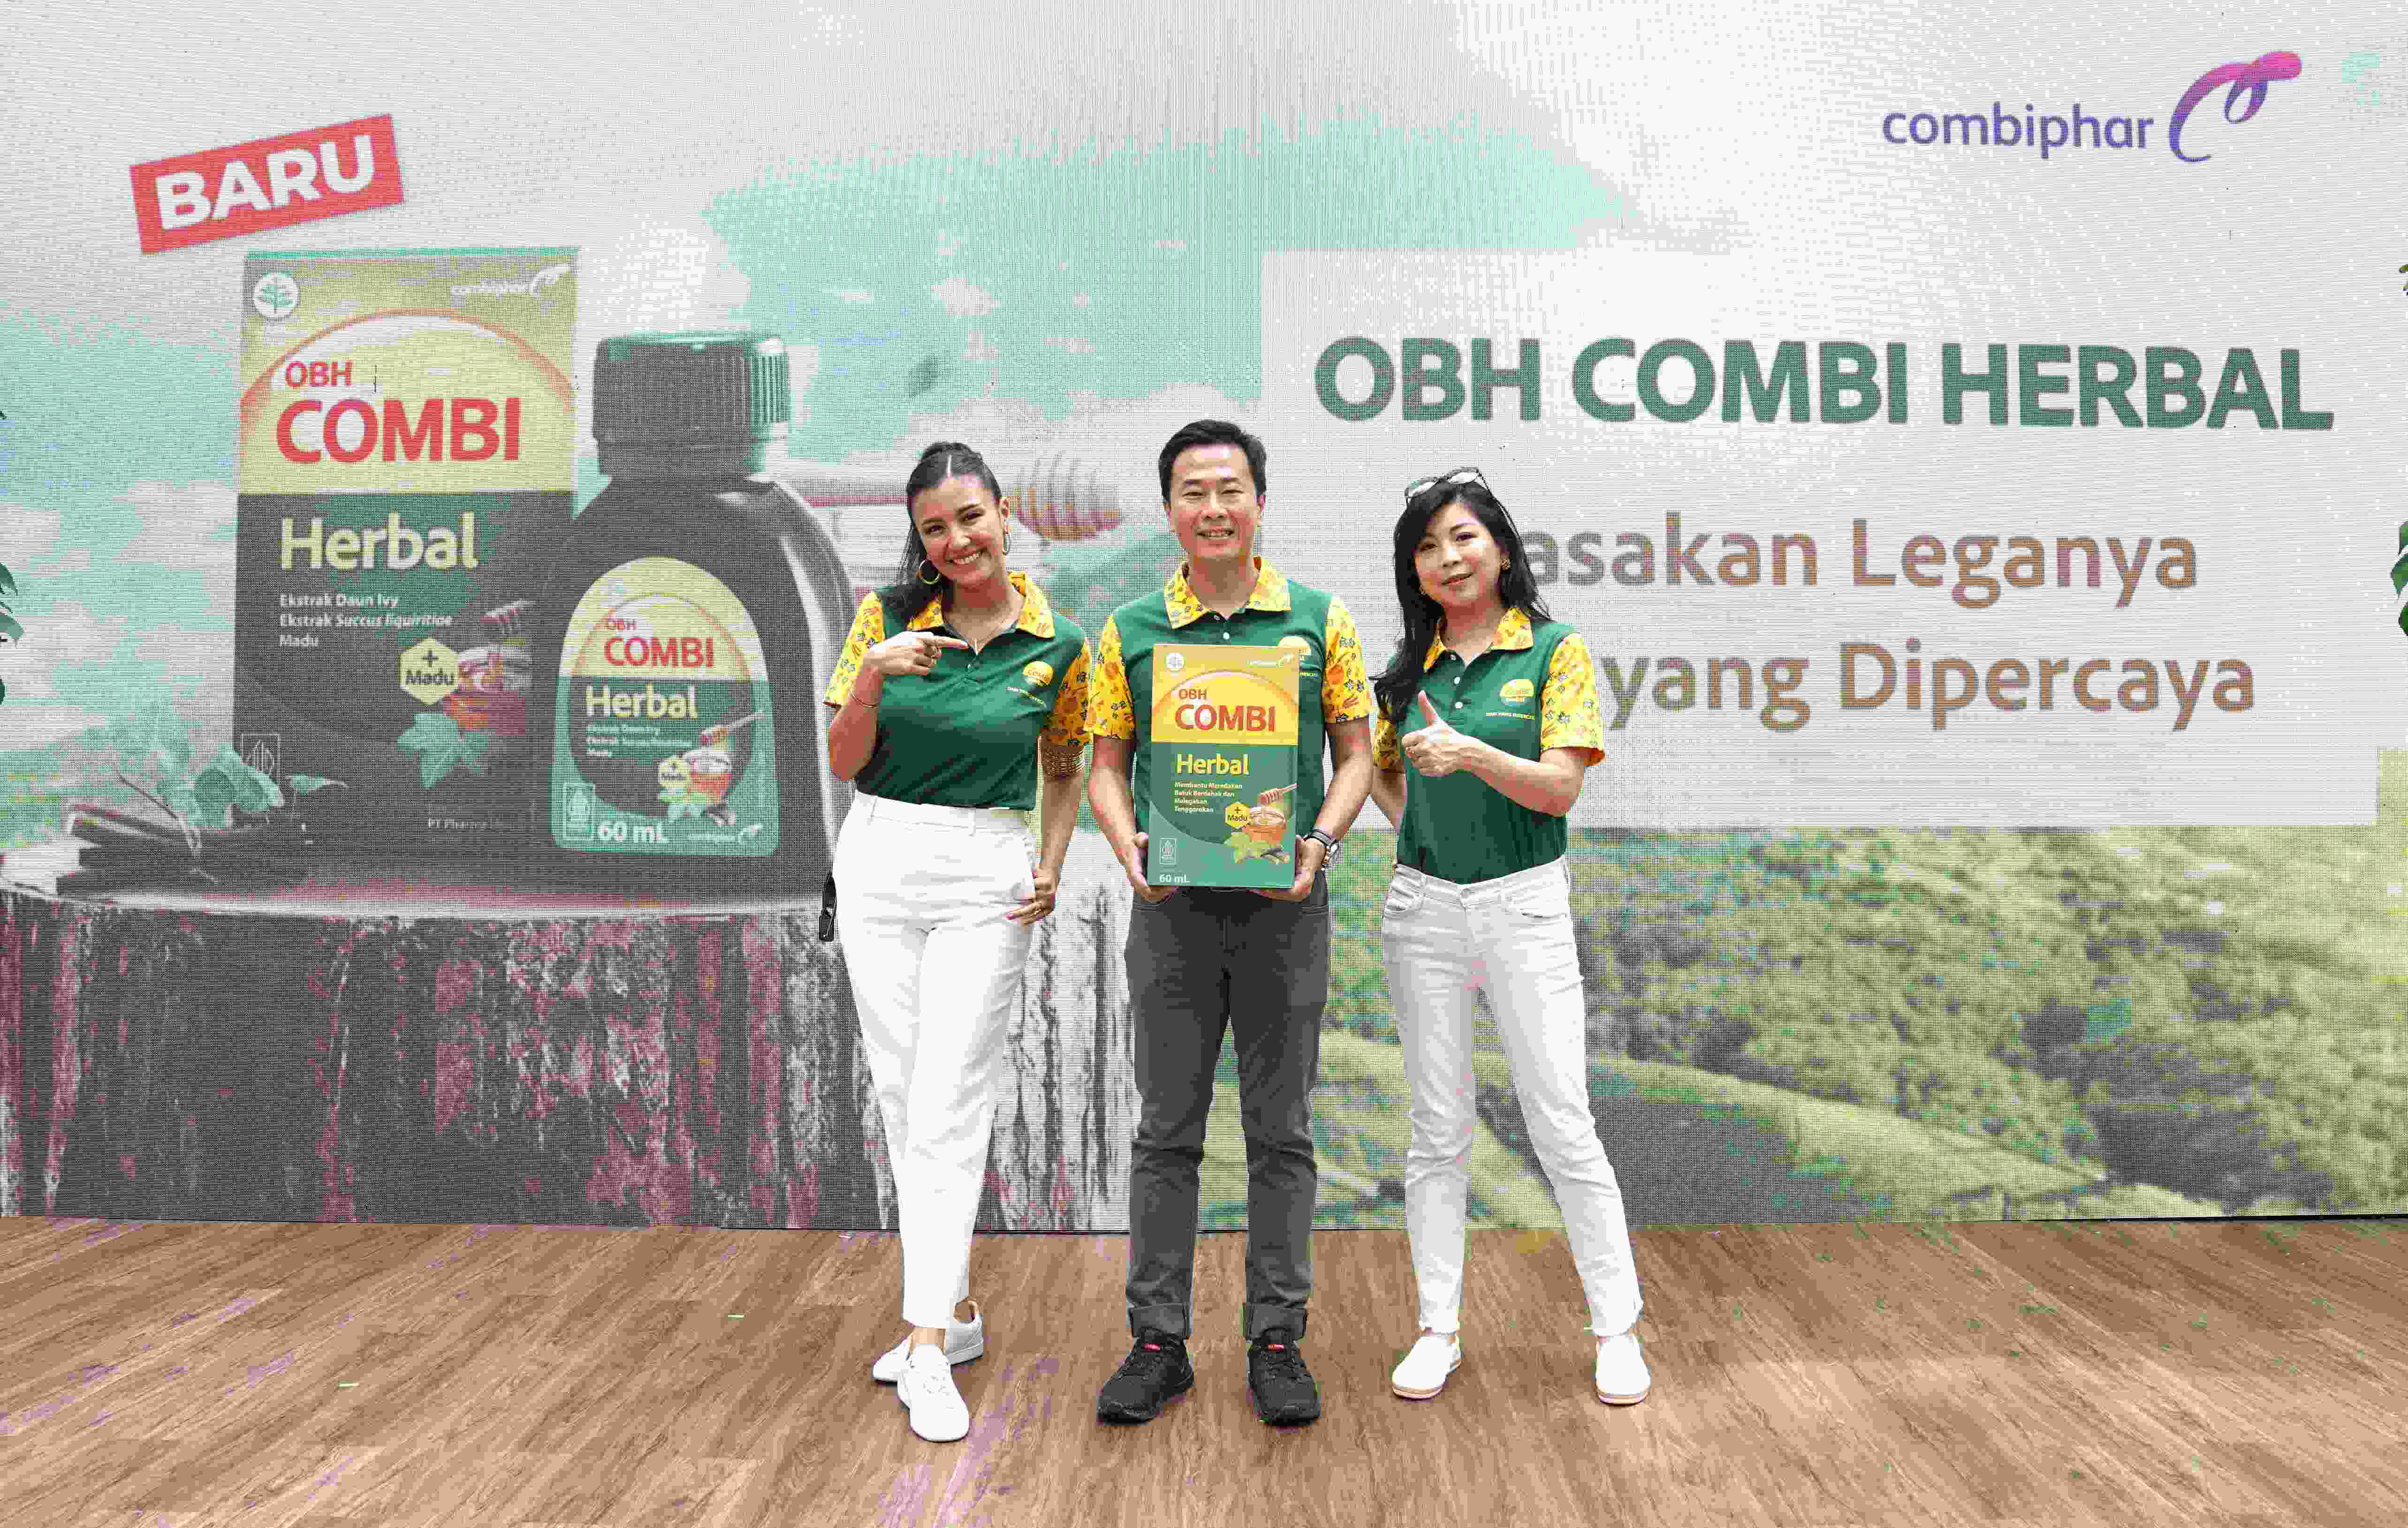 OBH Combi Introduces OBH Combi Herbal